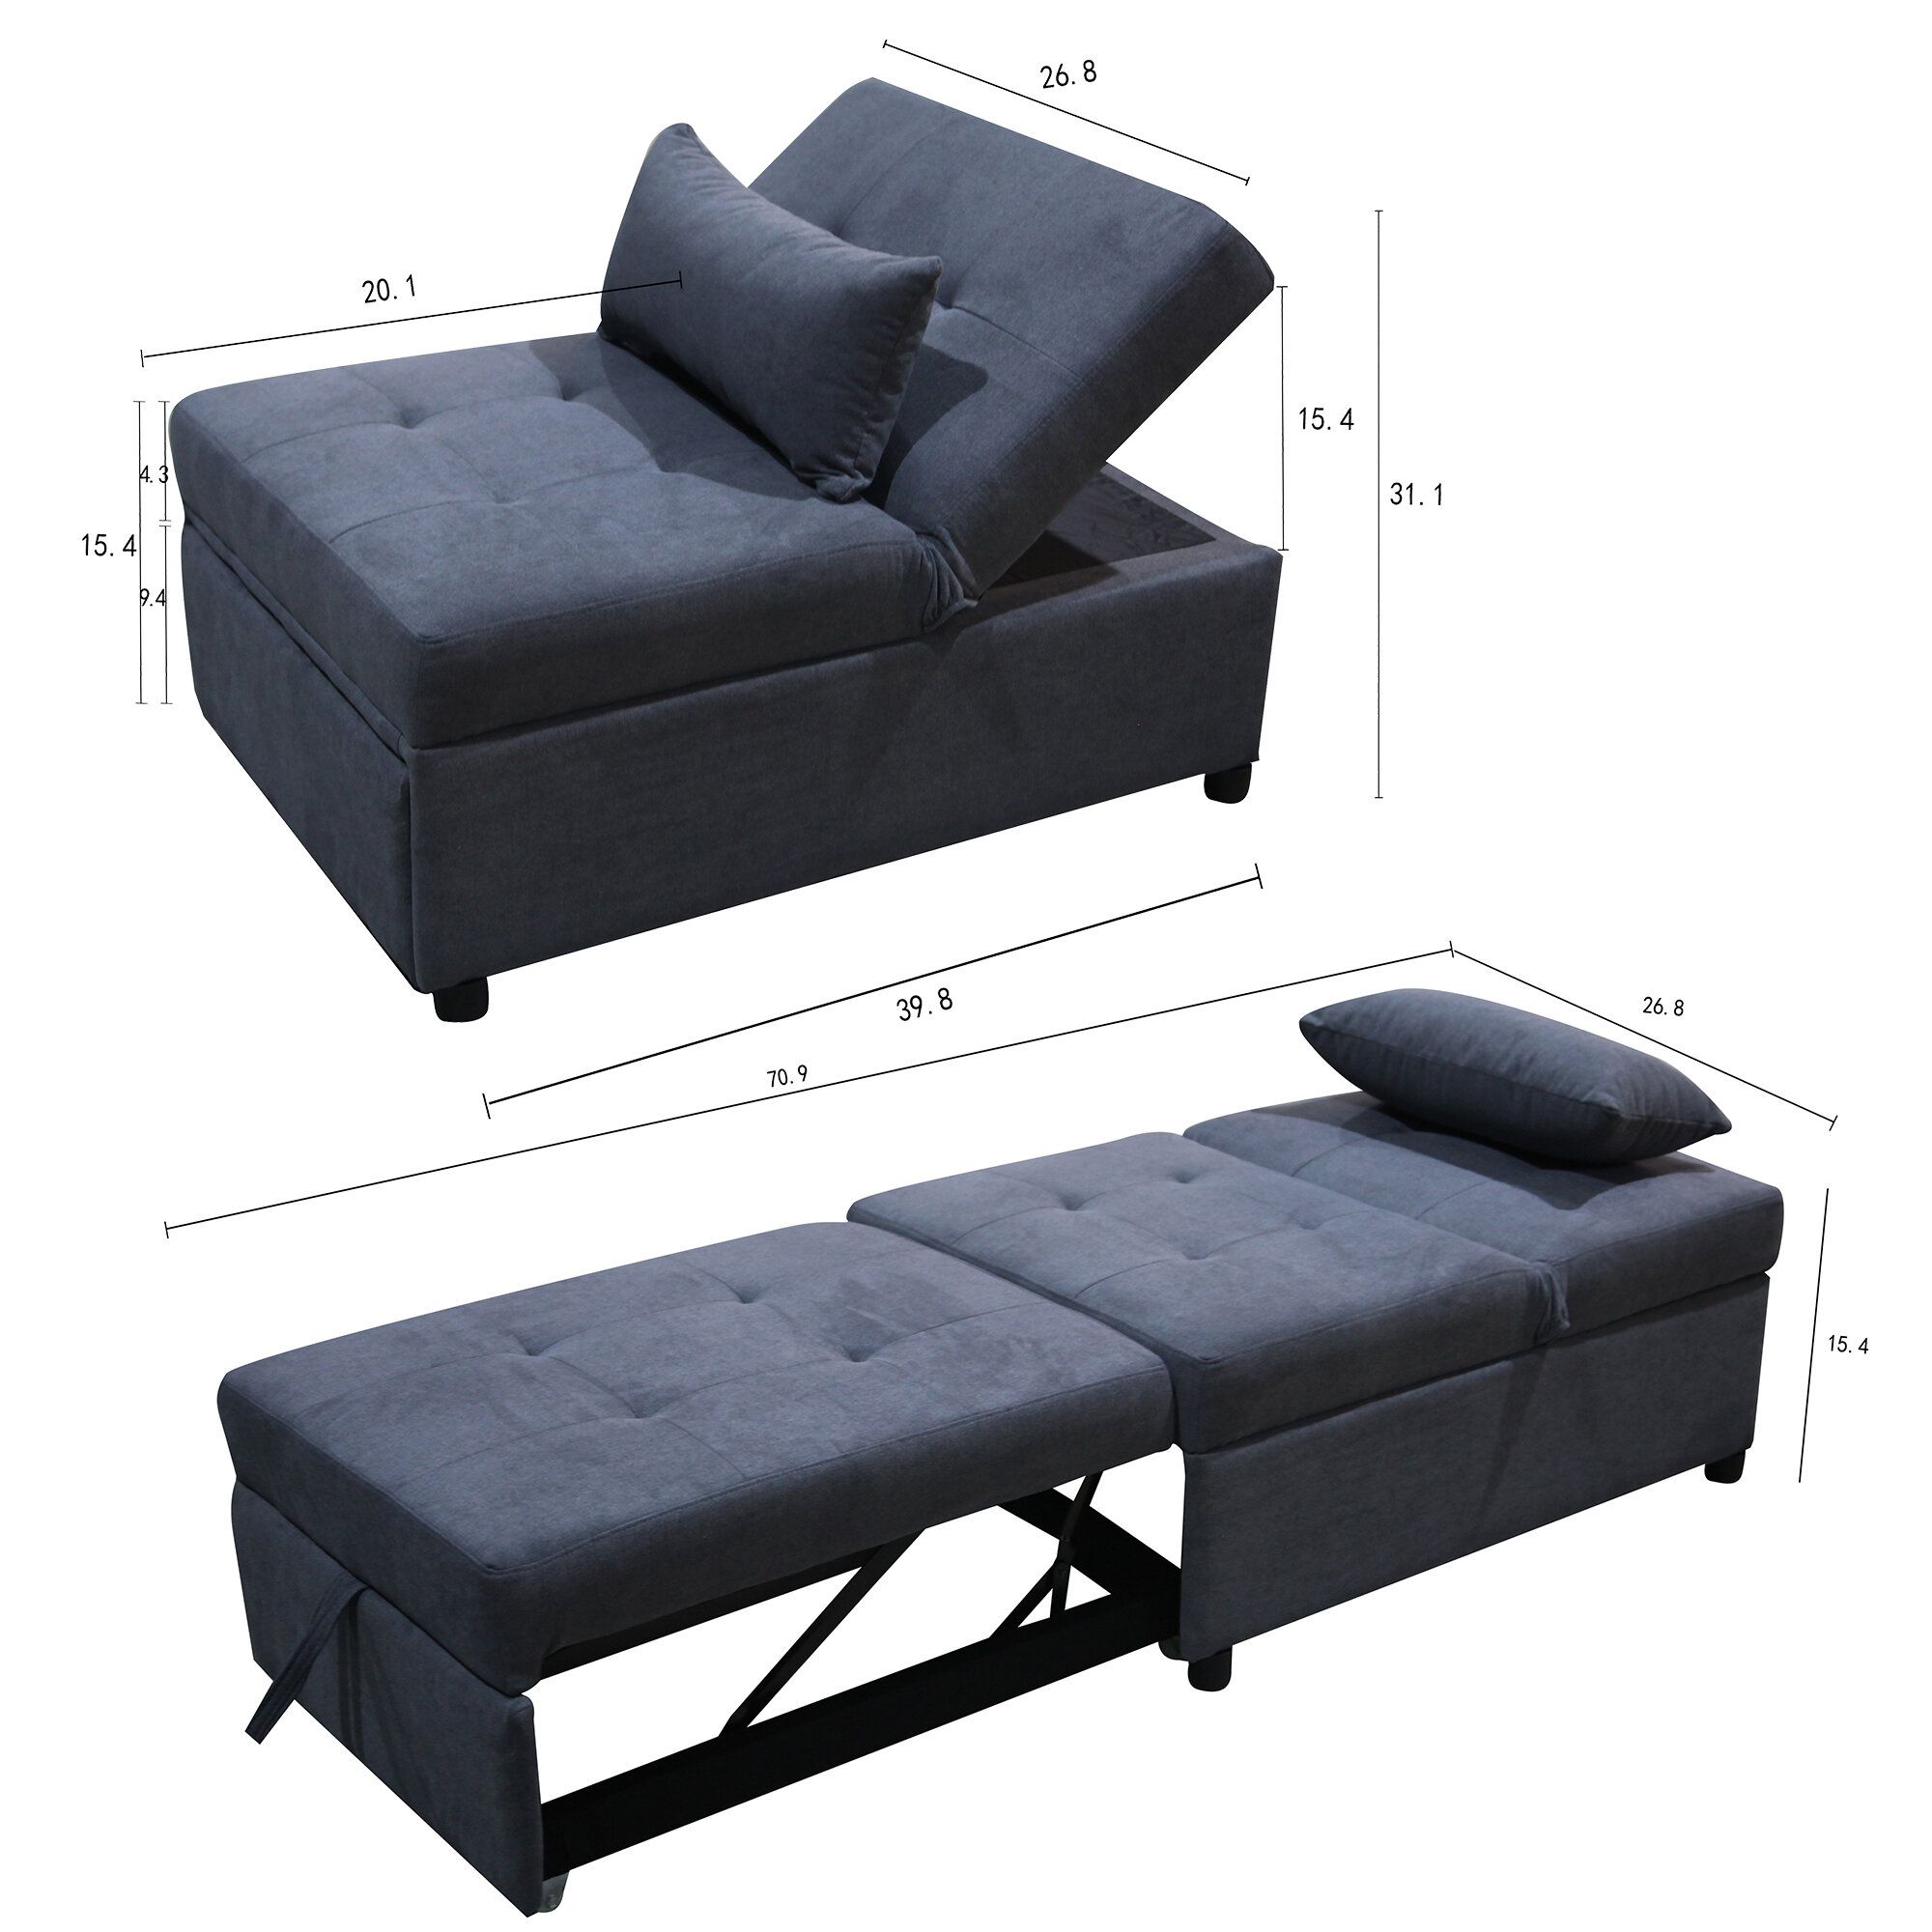 Latitude Run® Folding Ottoman Sleeper Leisure Bed, 4 In 1 Multi Function  Adjustable Ottoman Bench Guest Sofa Chair Sofa Bed | Wayfair Regarding 4 In 1 Convertible Sleeper Chair Beds (View 11 of 15)